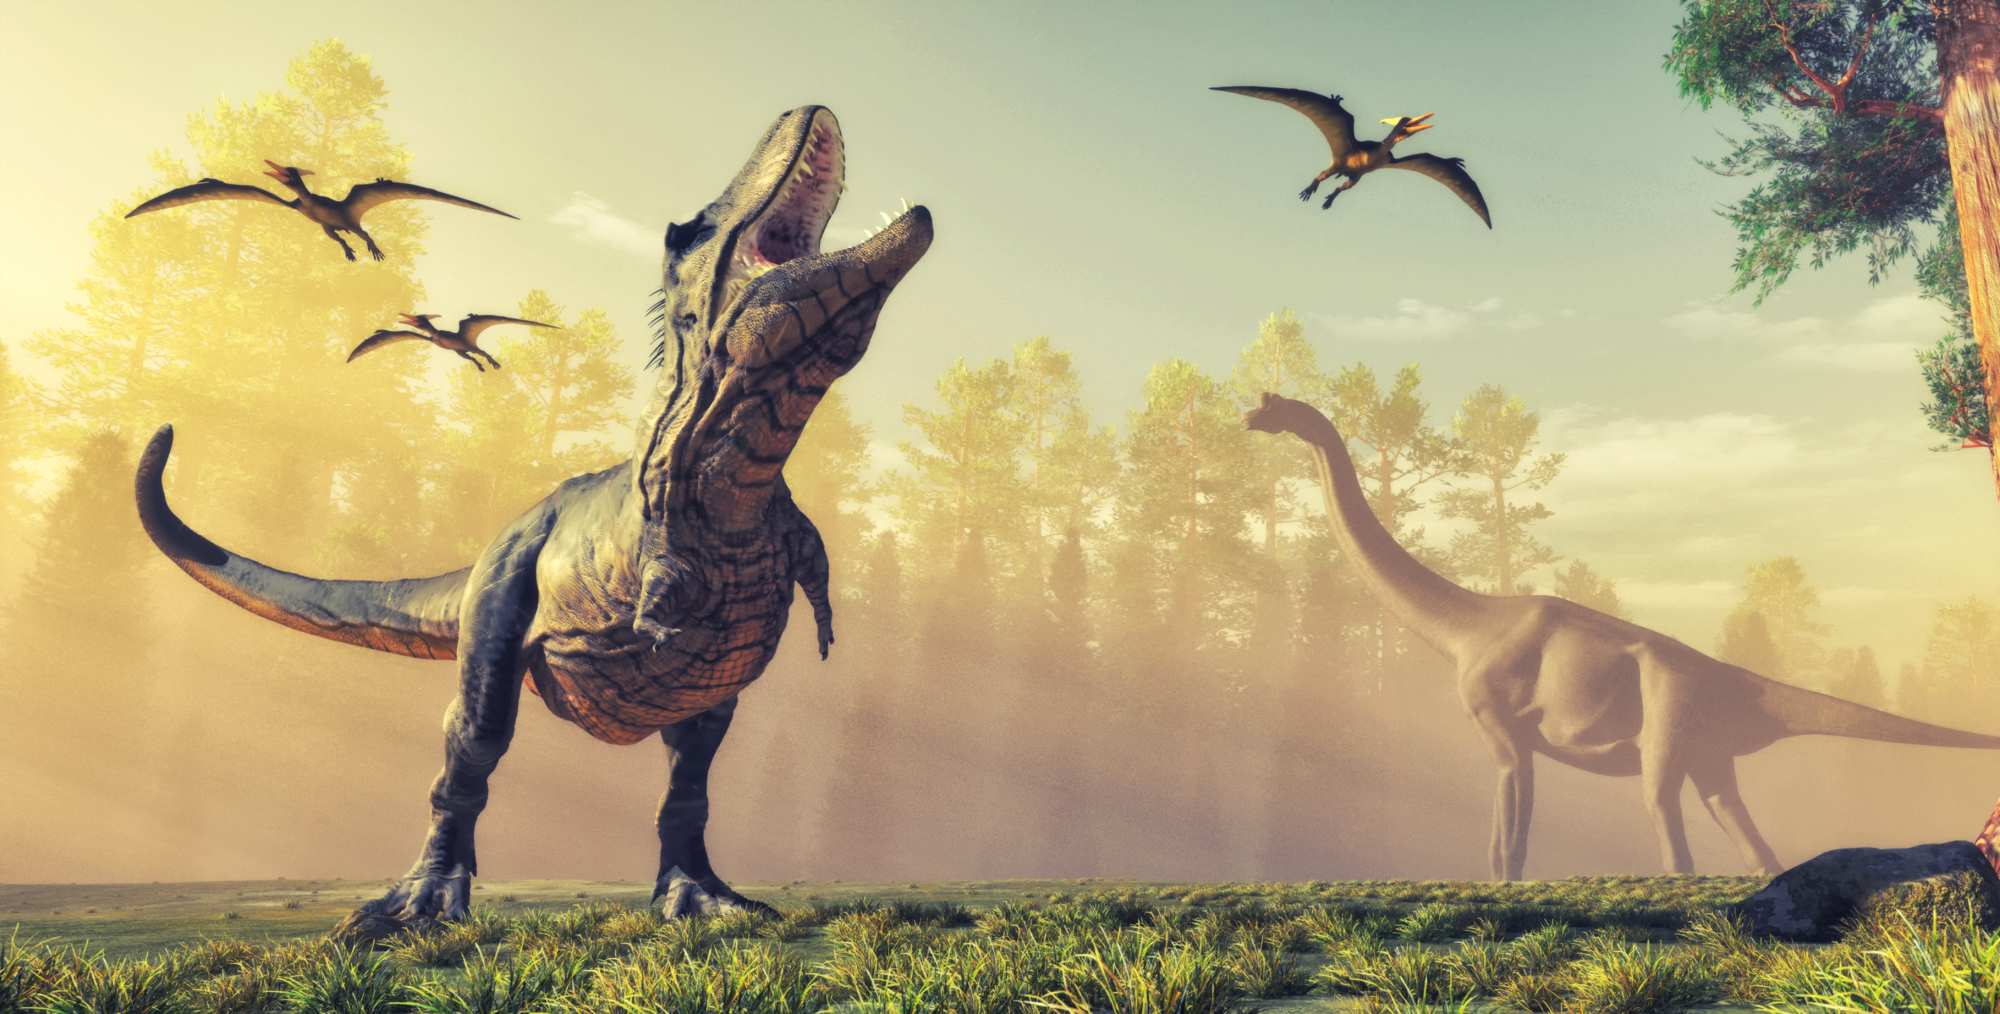 دایناسورها از دوران ماقبل تاریخ